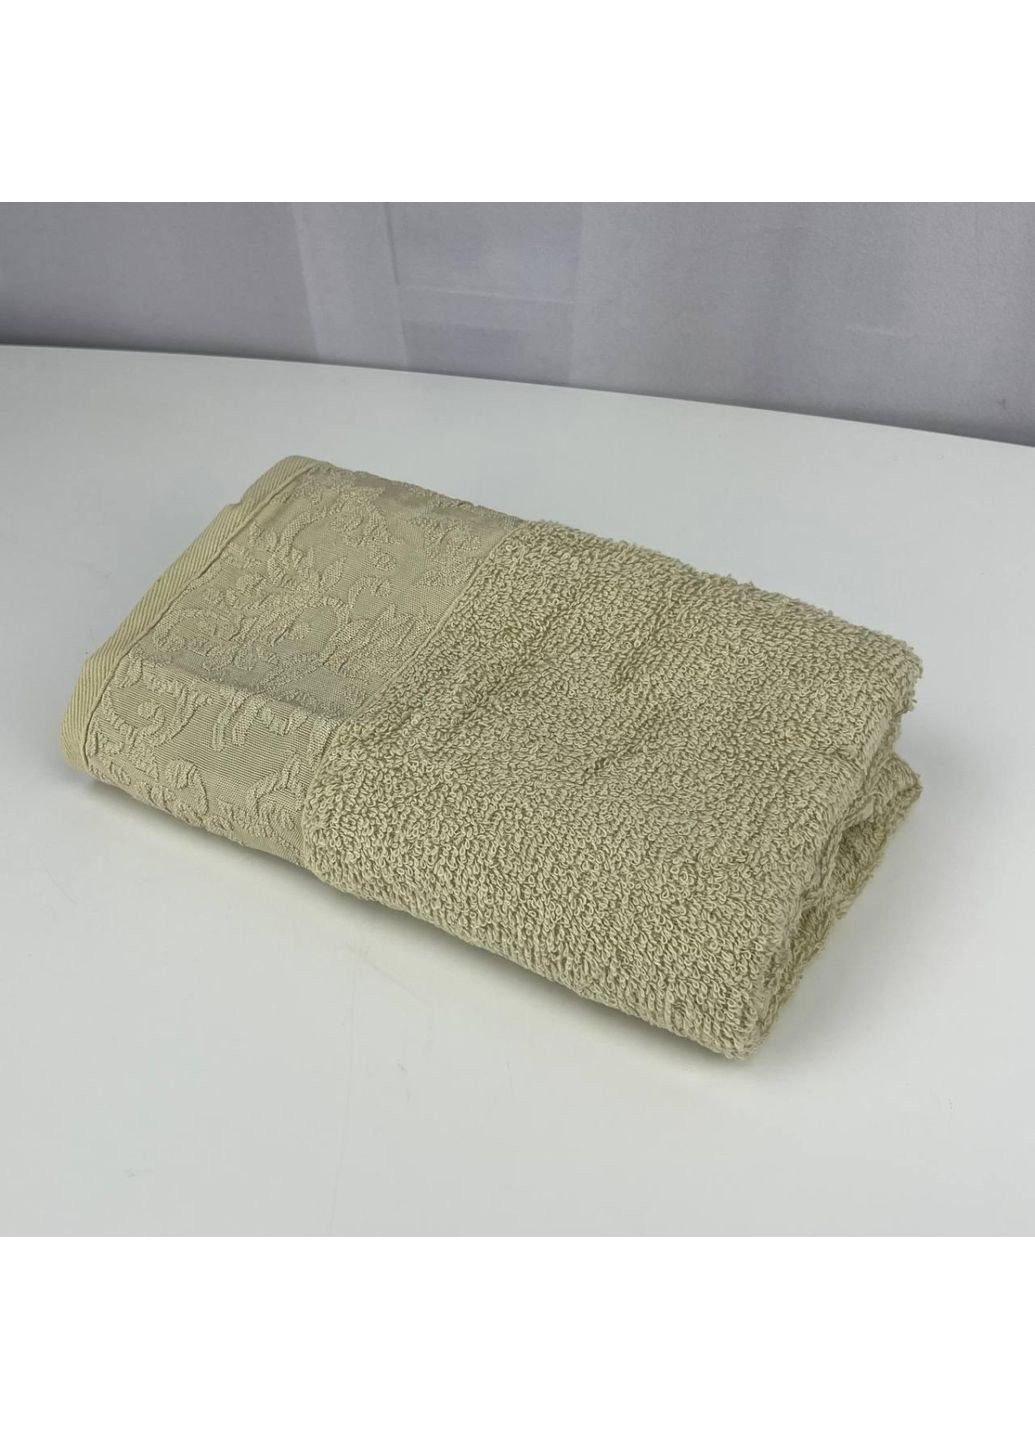 No Brand полотенце для лица махровое febo vip cotton botan турция 6401 бежевое 50х90 см комбинированный производство - Украина